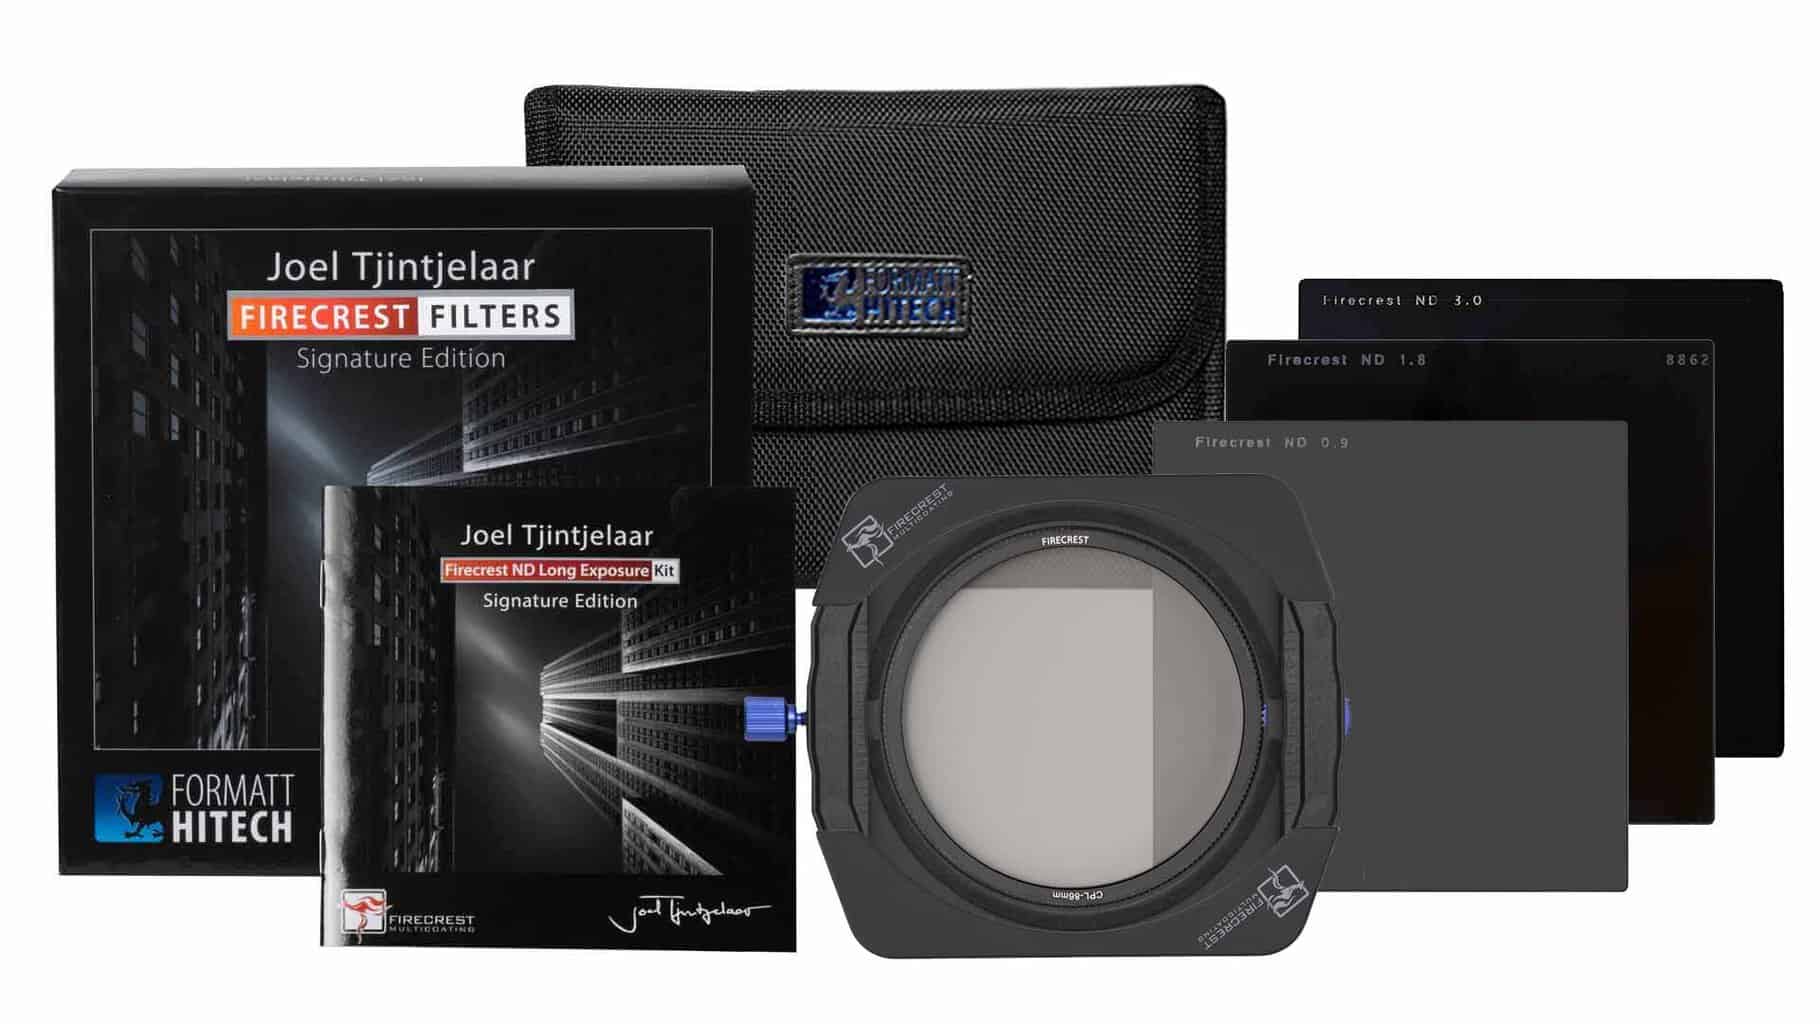 Joel Tjintjelaar signature edition Formatt Hitech filter kit #1 Review, 100mm Firecrest Pro and Ultra versions.